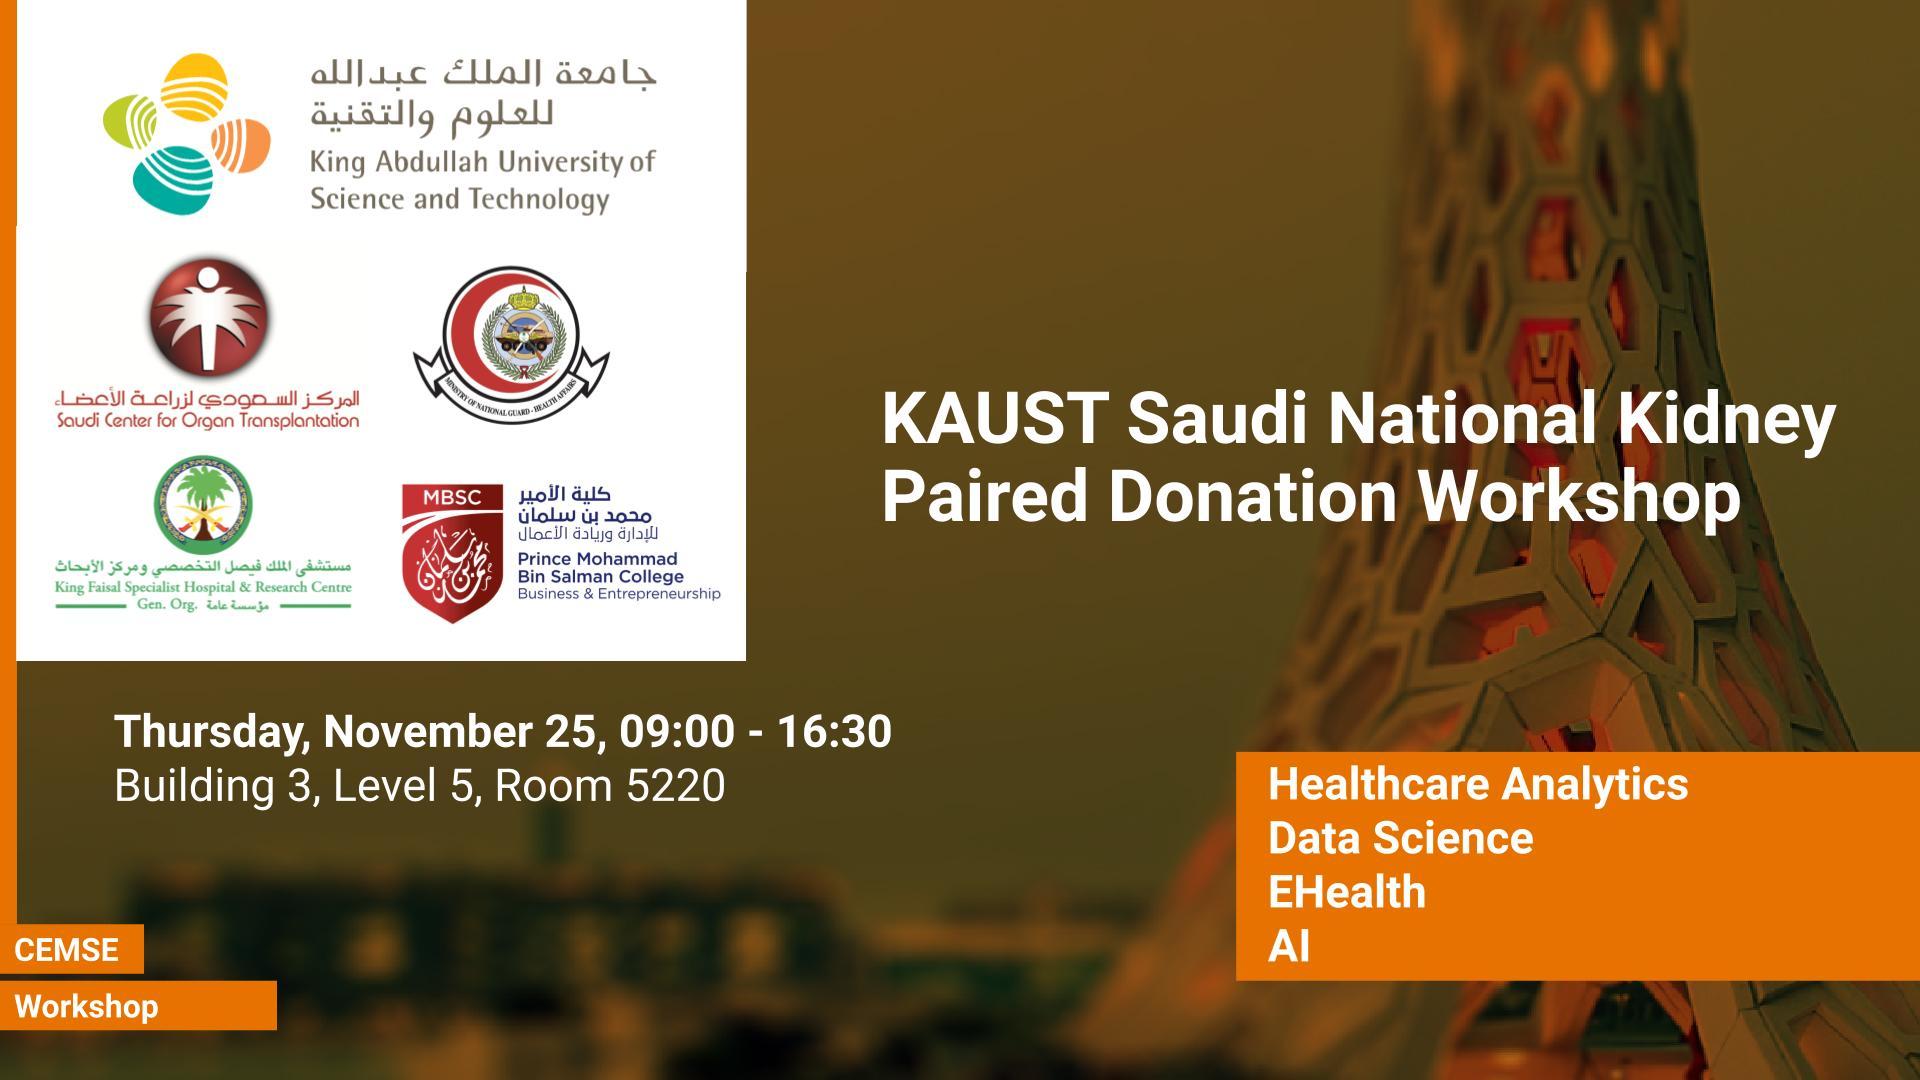 KAUST-CEMSE-Workshop-KAUST-Saudi-National-Kidney-Paired-Donation-Workshop